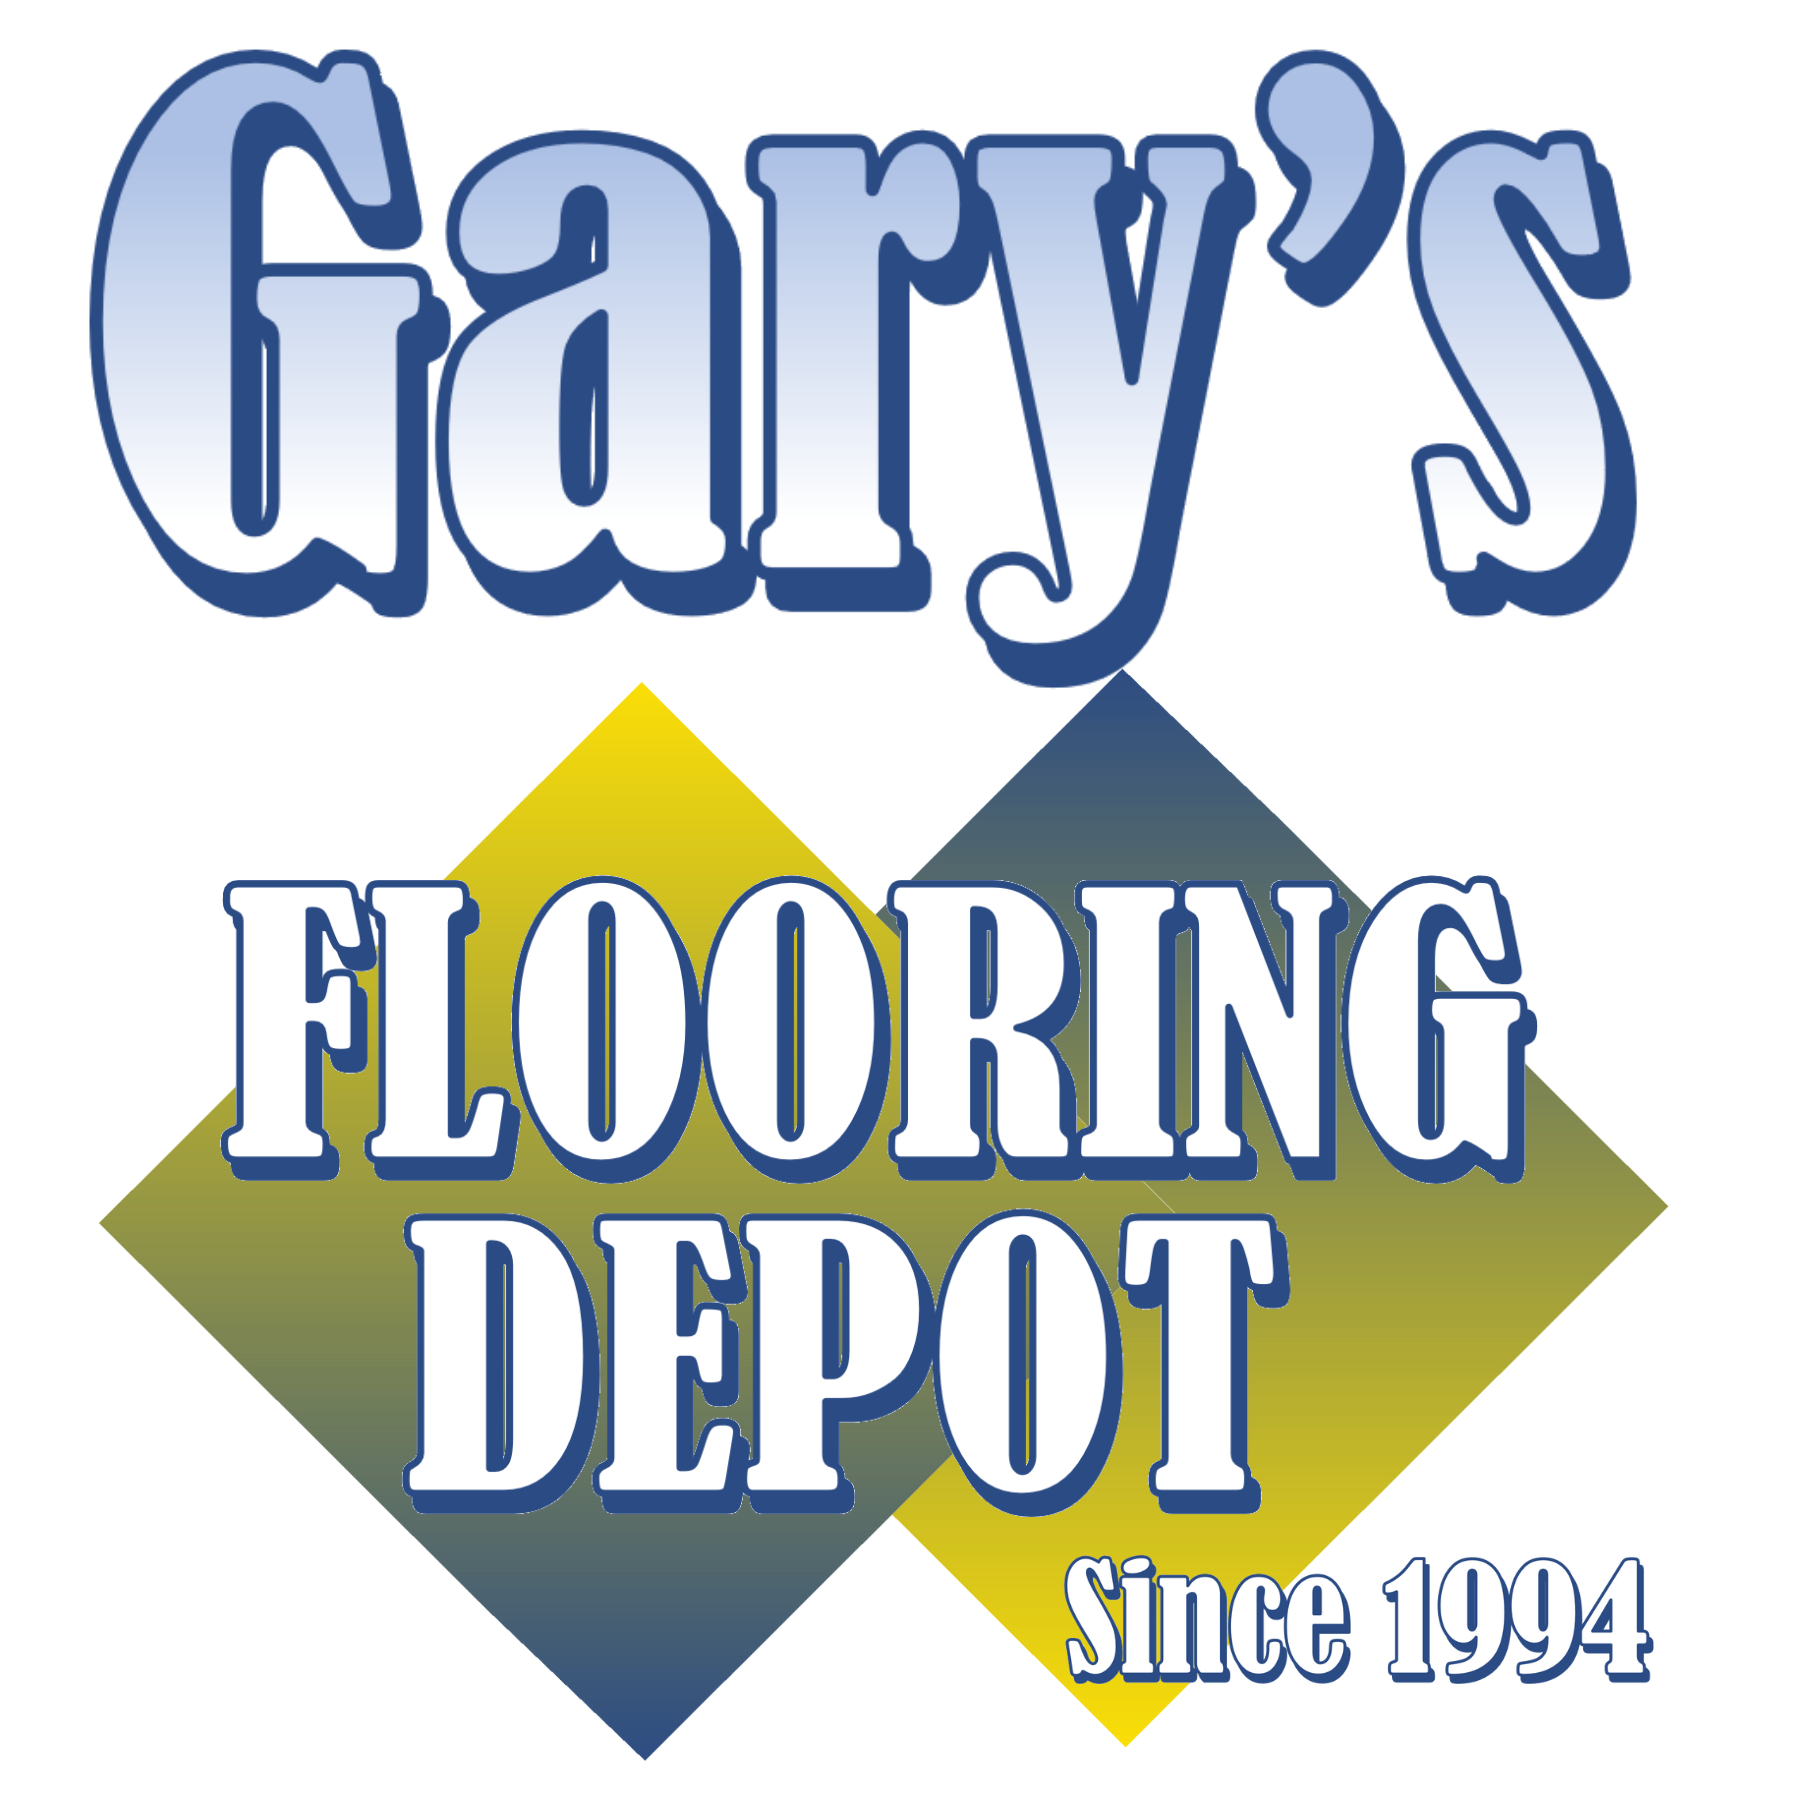 Gary's Carpet & Flooring Depot Logo